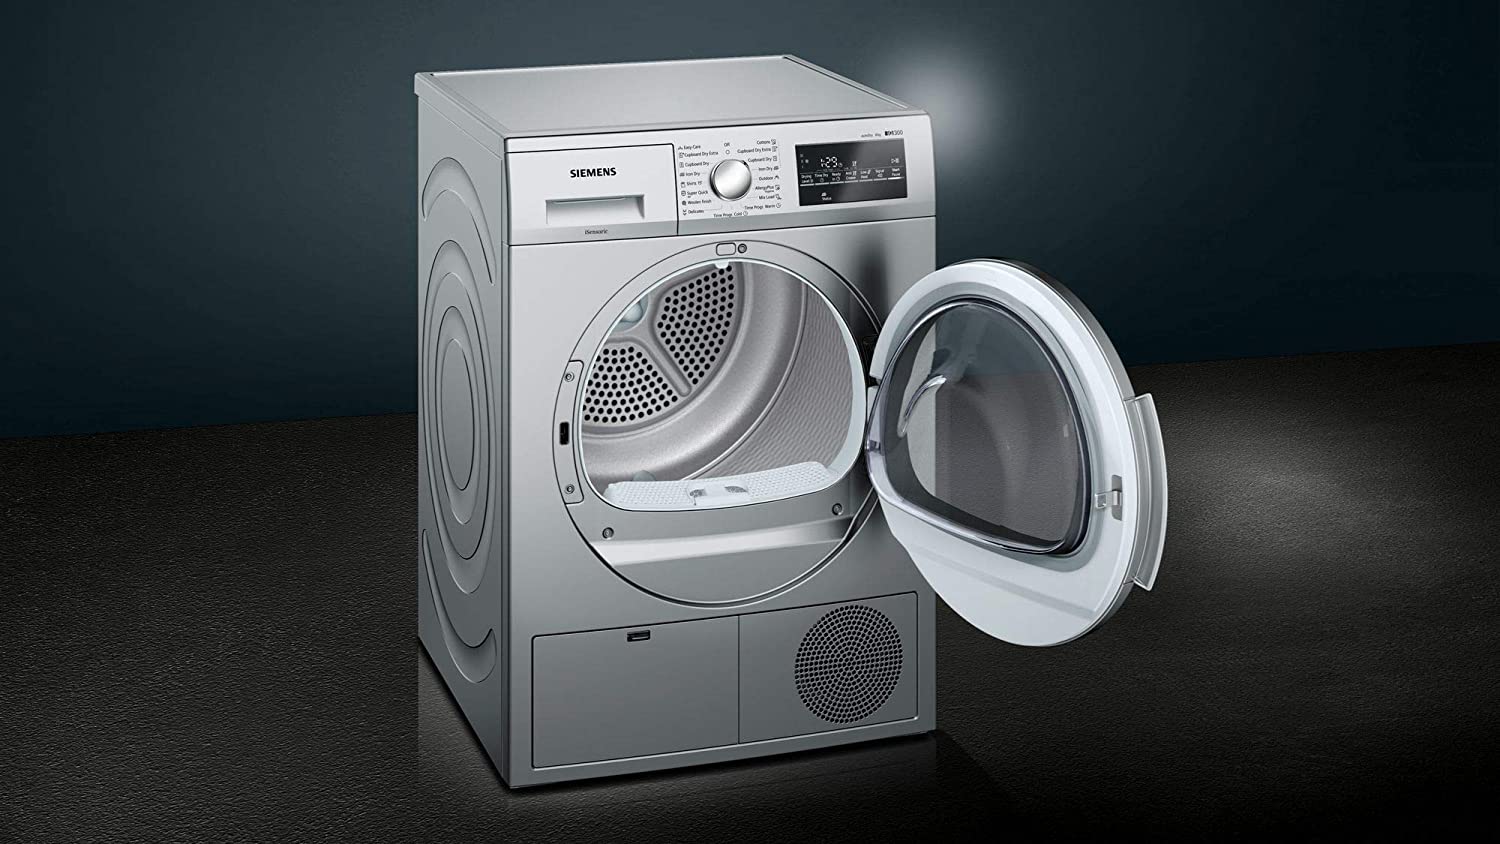 Siemens WT46G402IN Font-Loading 8 Kg Condenser Tumble Dryer